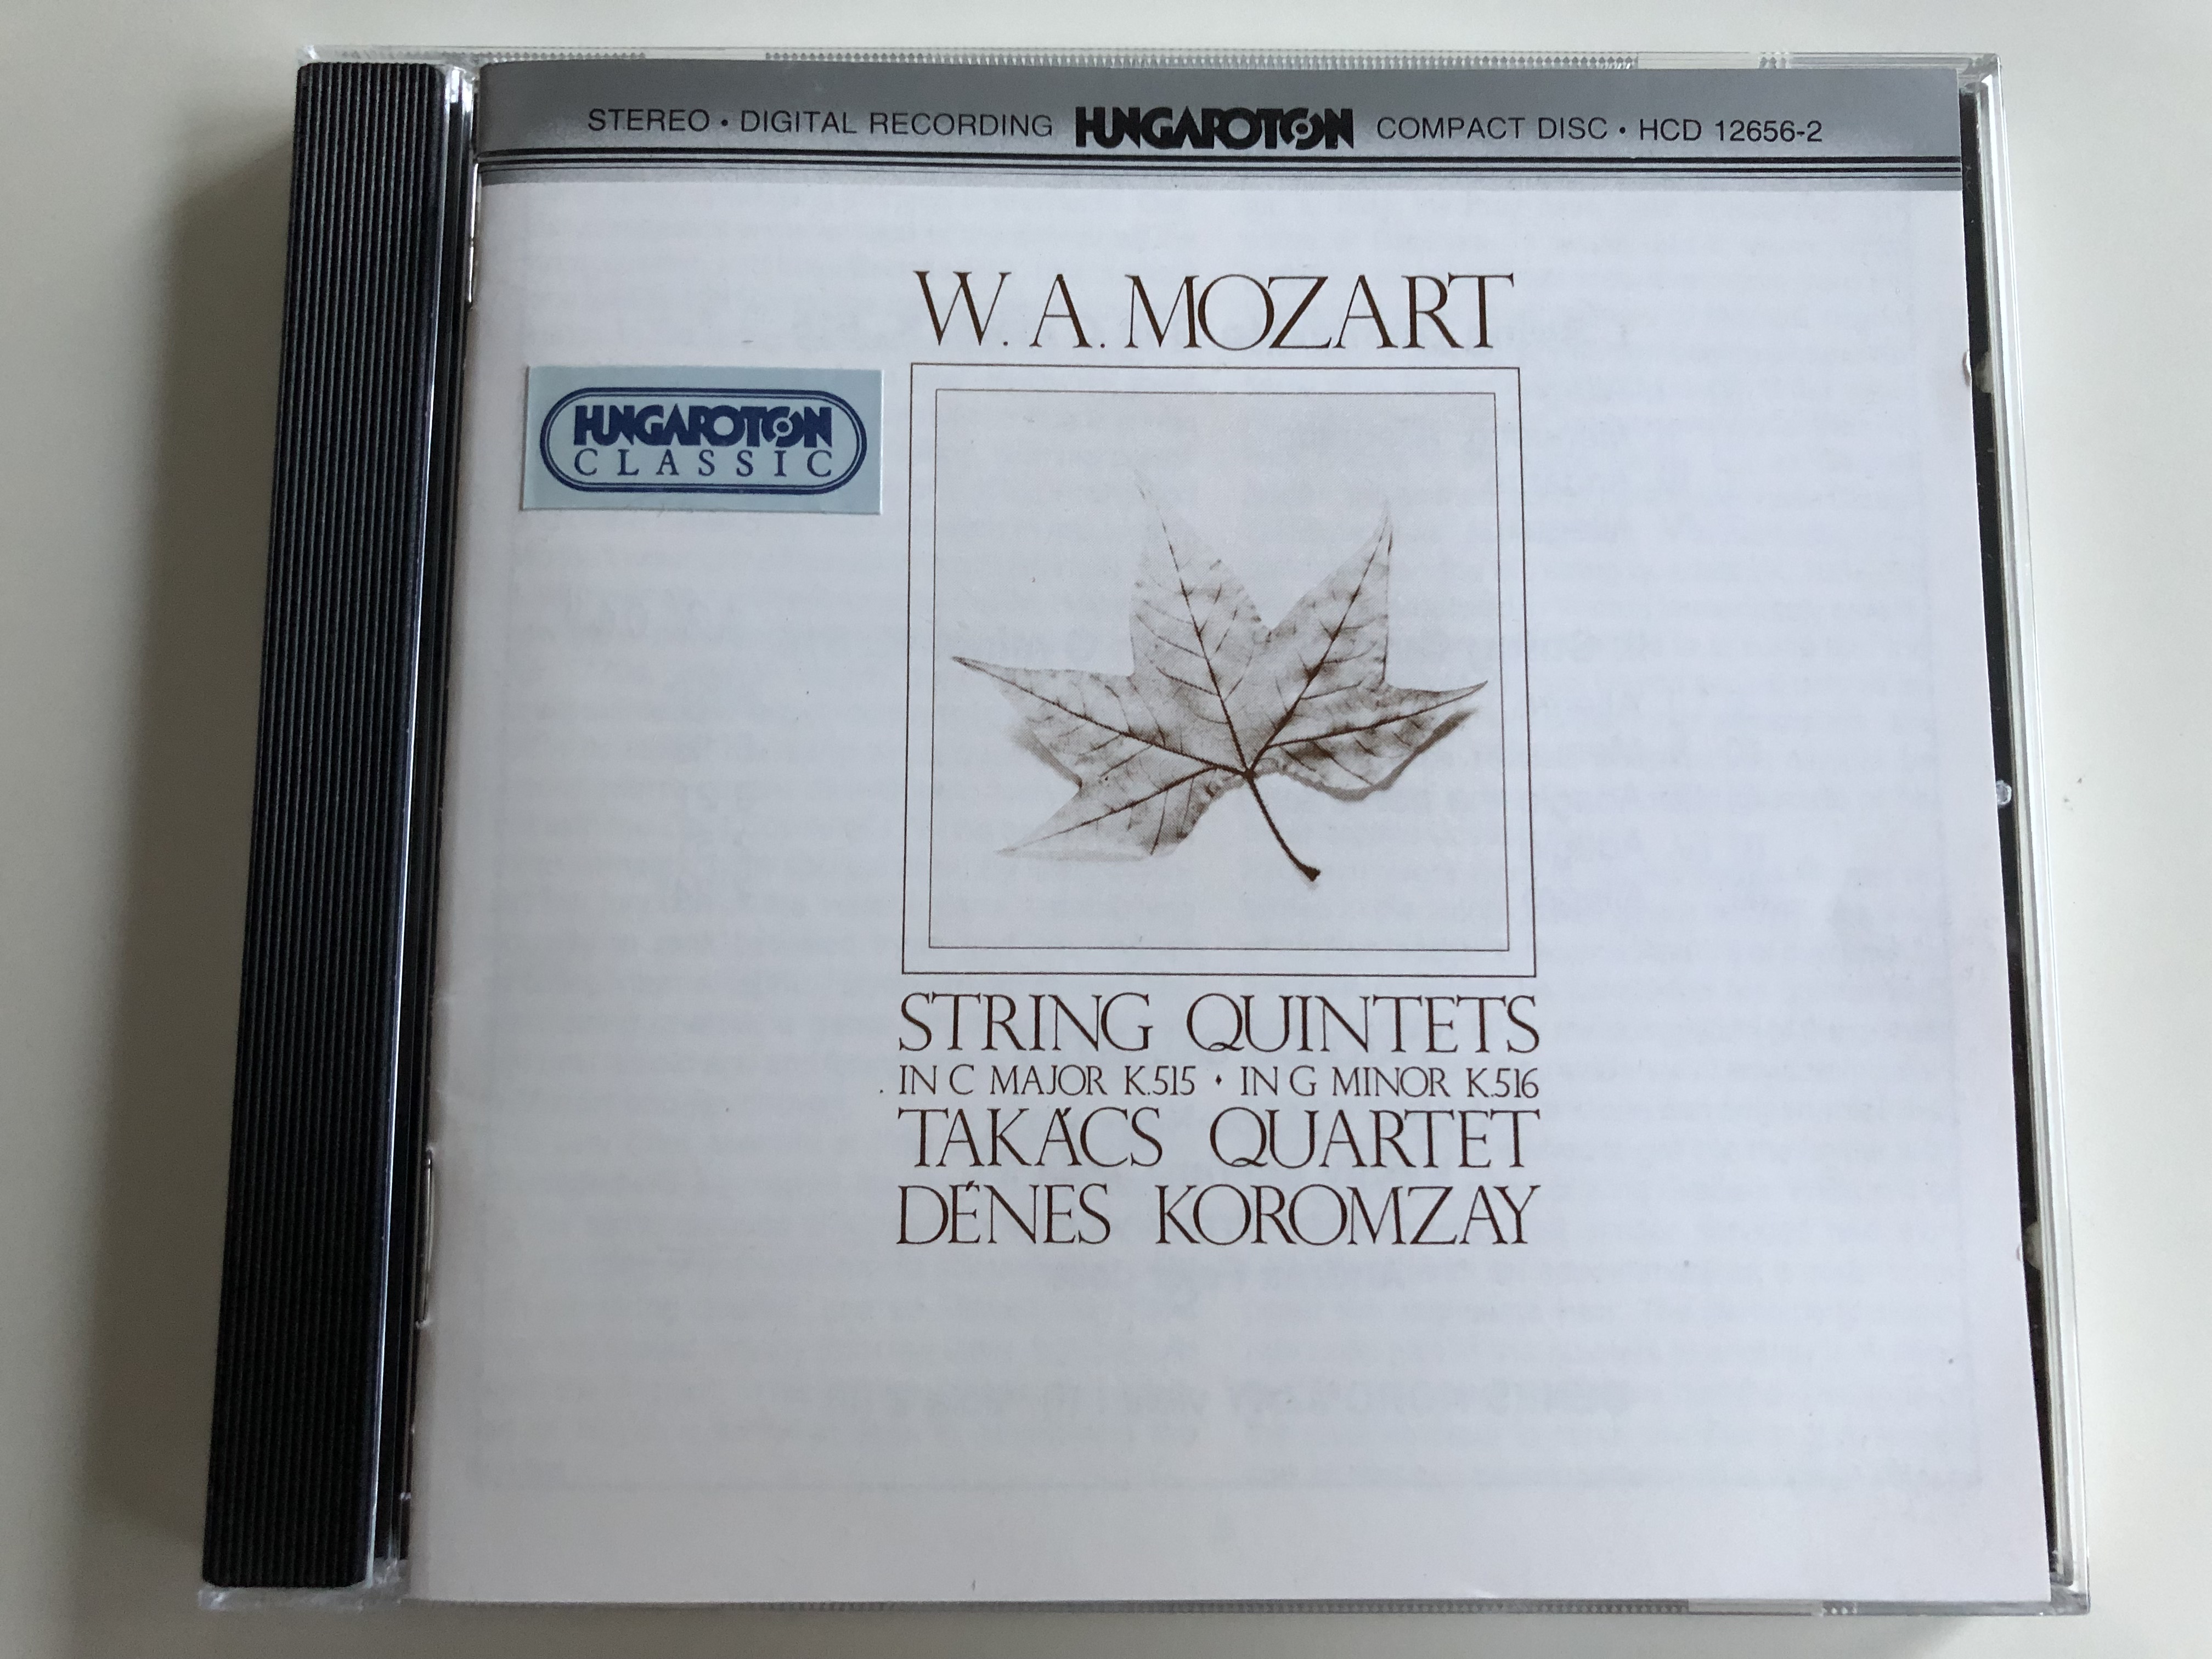 w.-a.-mozart-string-quintets-in-c-major-k-515-in-g-minor-k-516-tak-cs-quartet-d-nes-koromzay-hungaroton-classic-audio-cd-1985-hcd-12656-2-1-.jpg